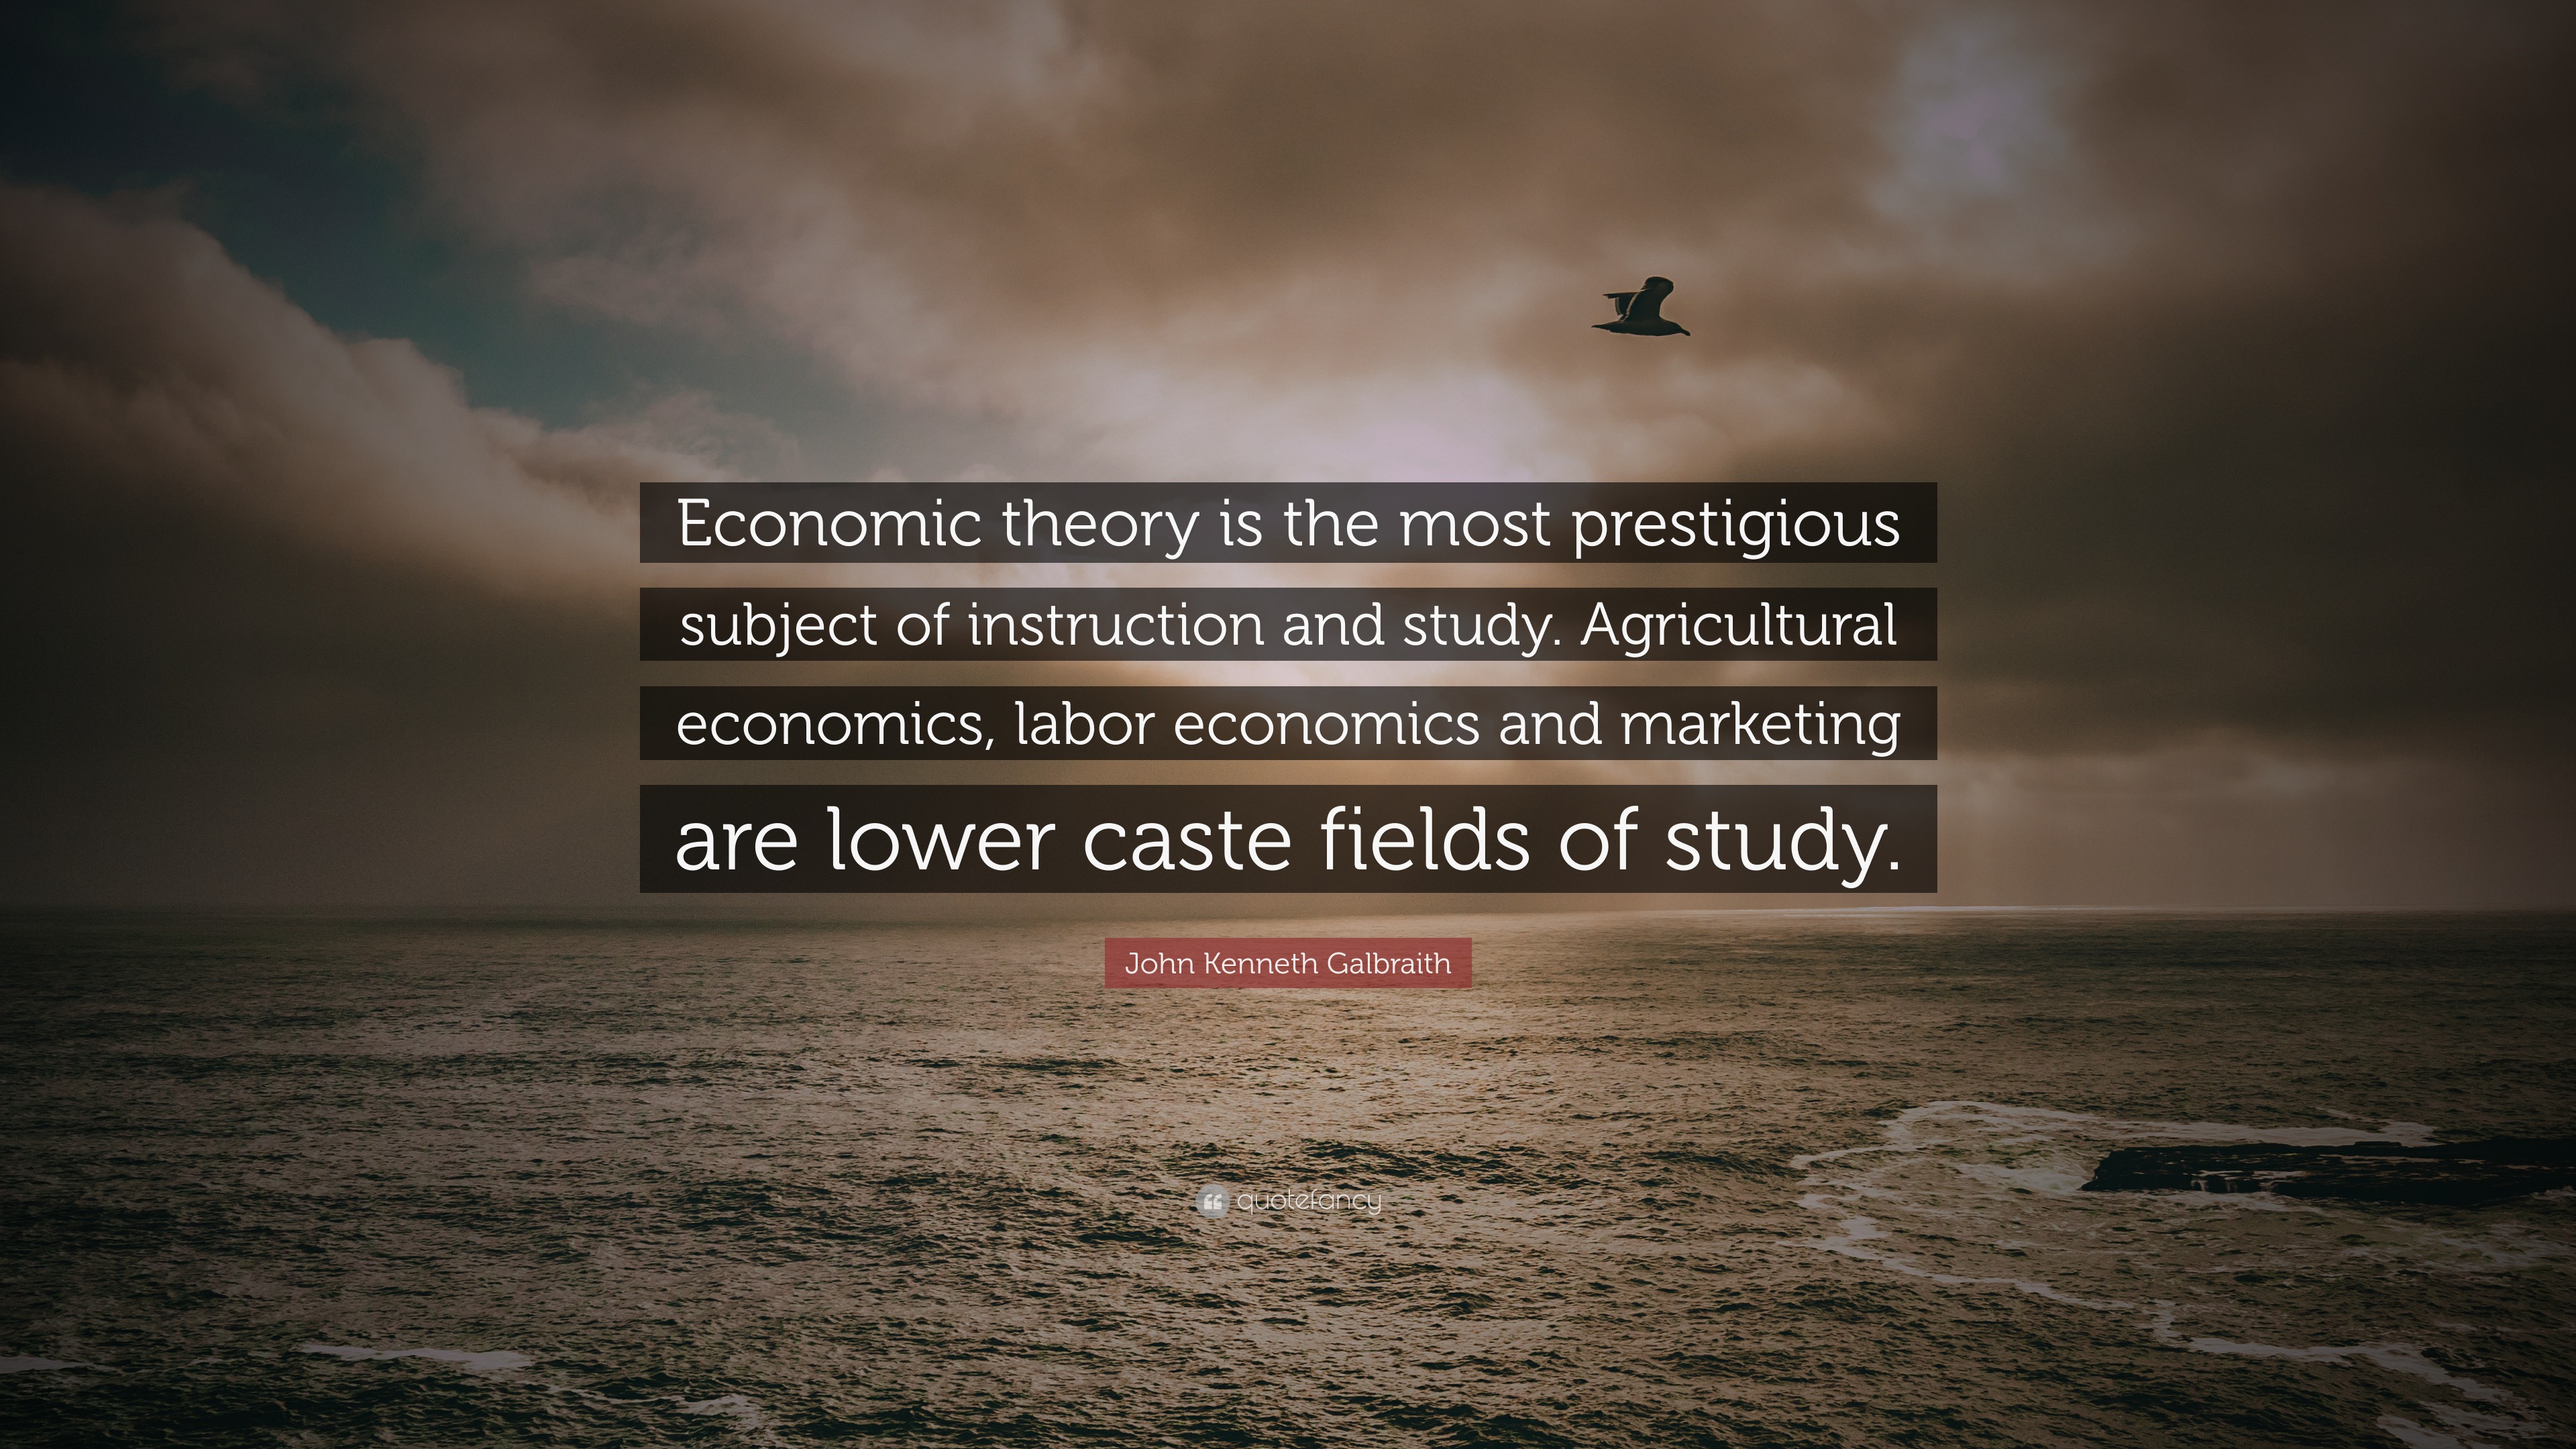 why study economics labour